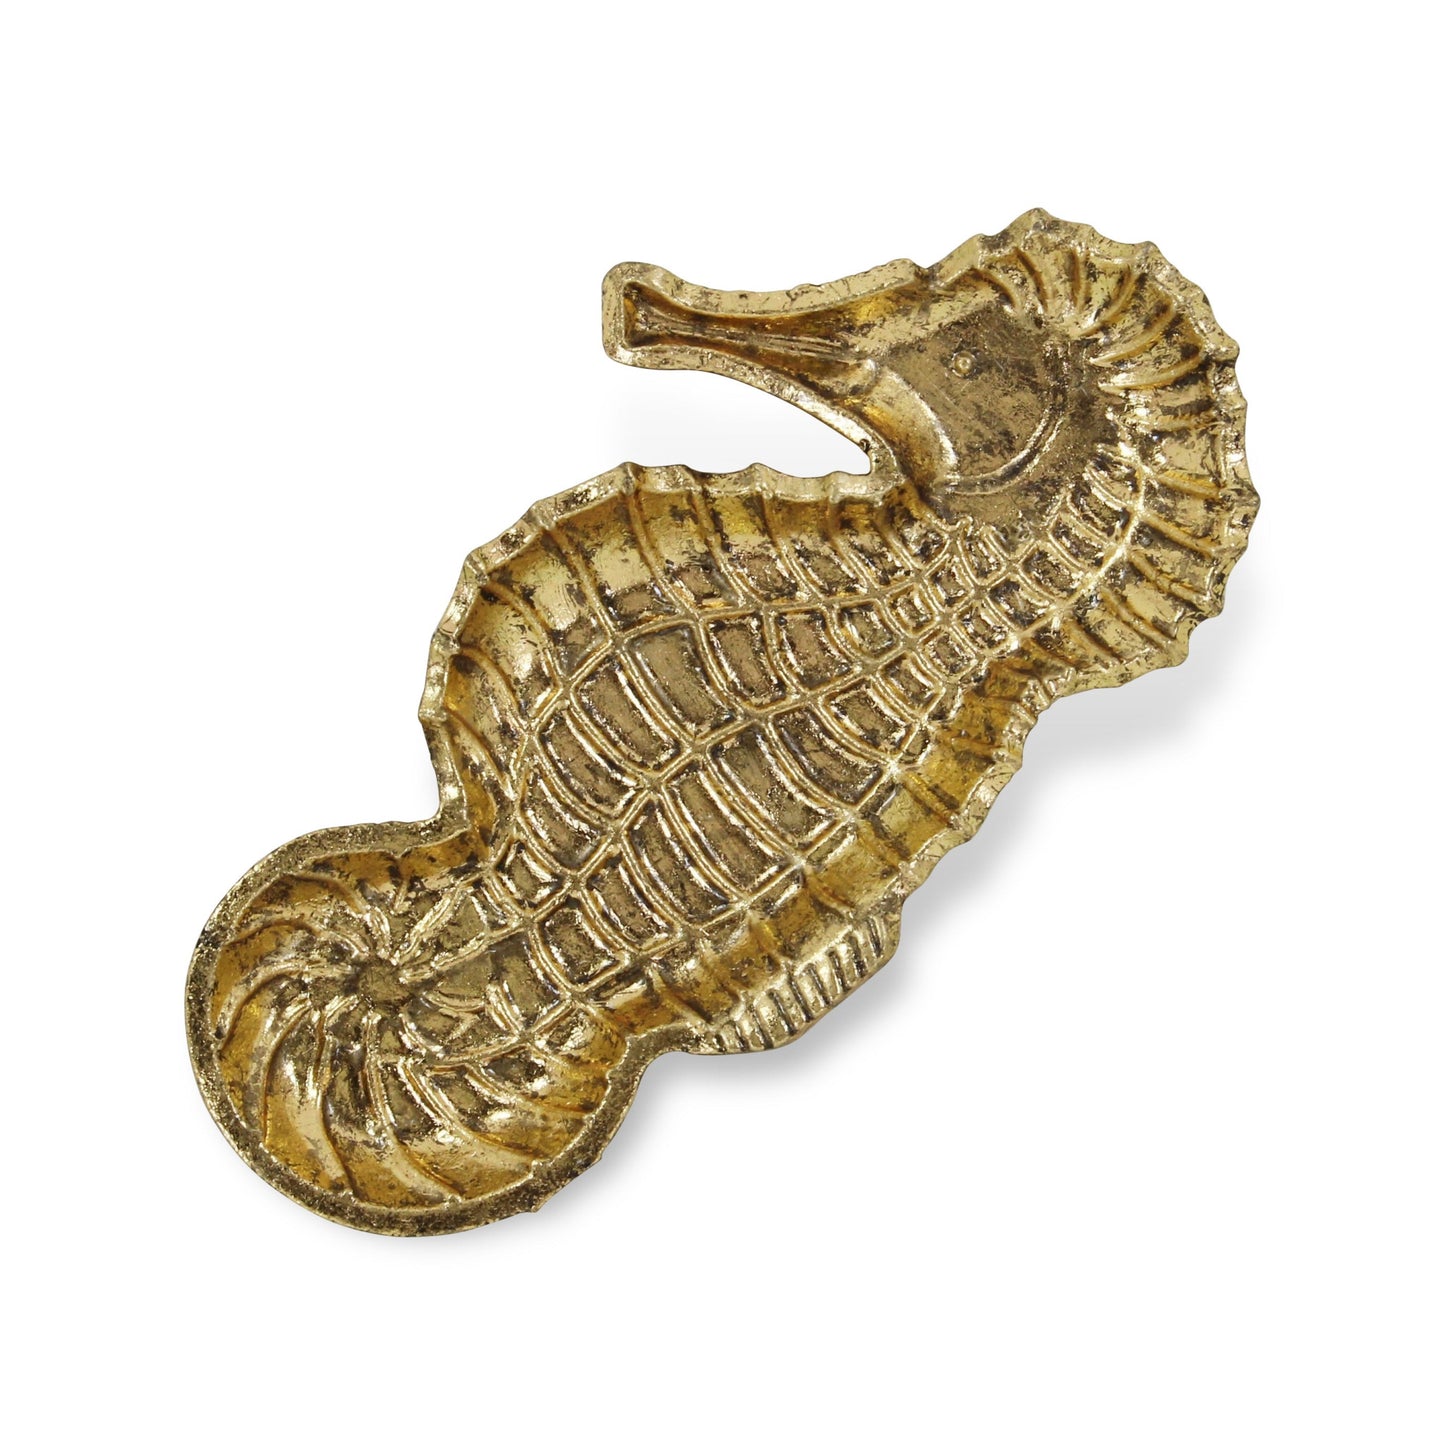 6" Gold Sea Horse Metal Handmade Tray